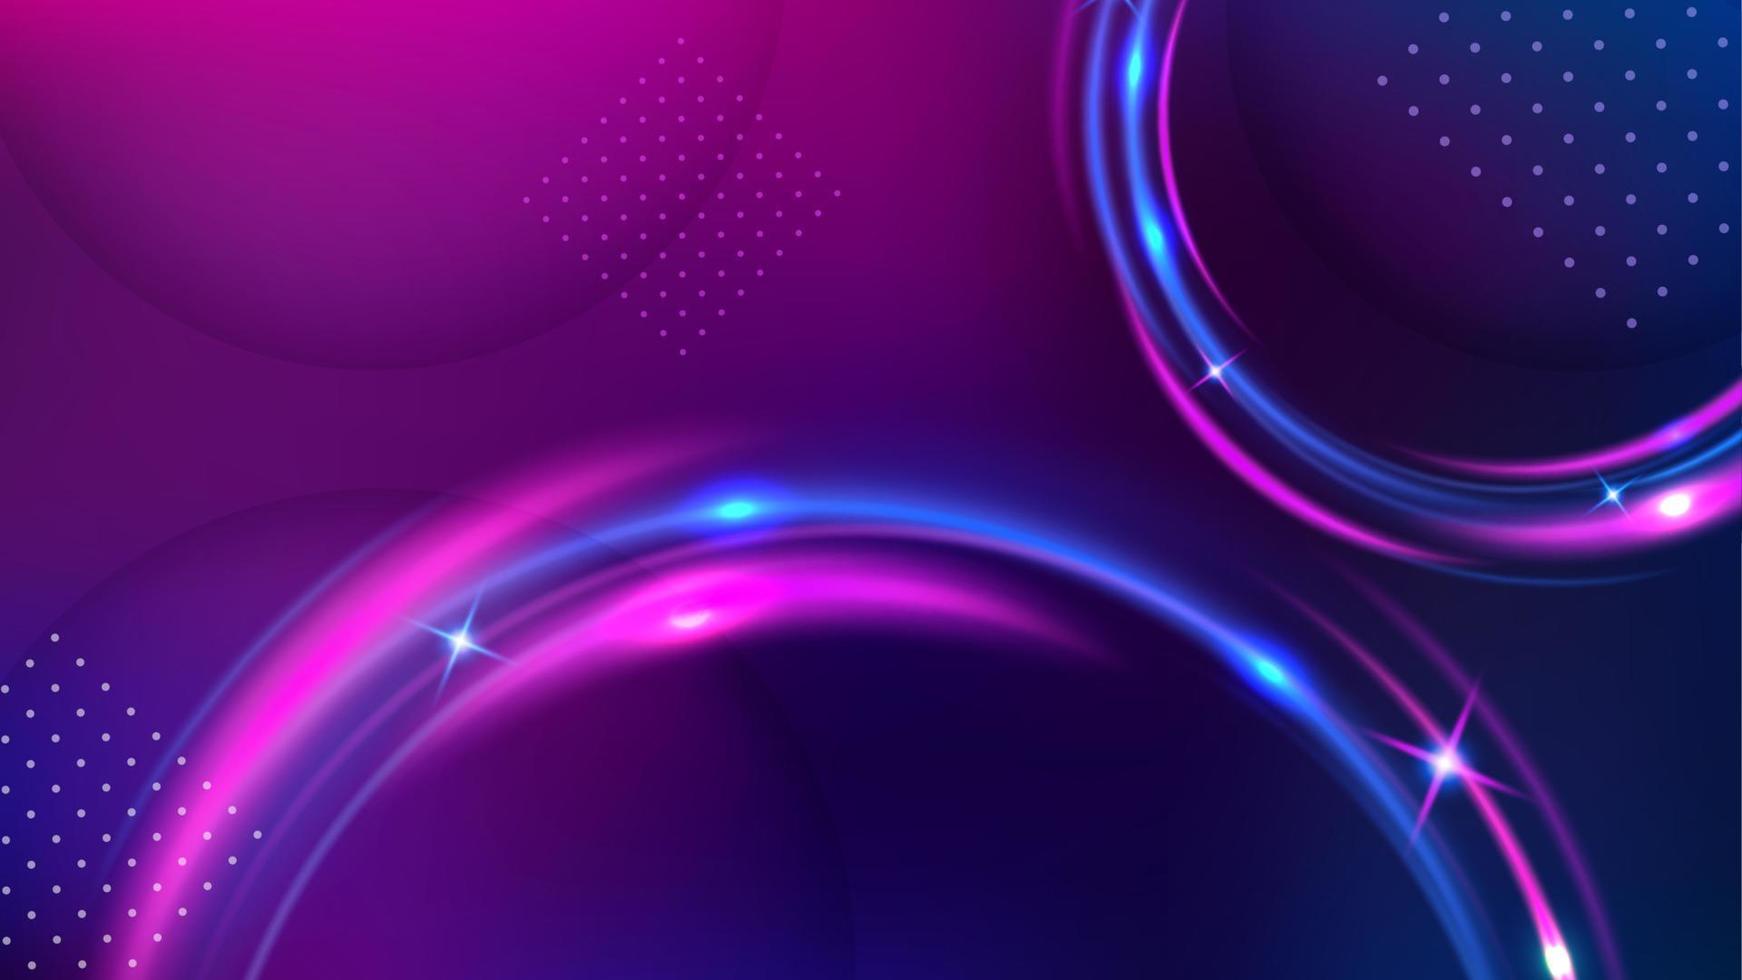 Light Ring Background, Elegant Violet Light. Widescreen Vector Illustration